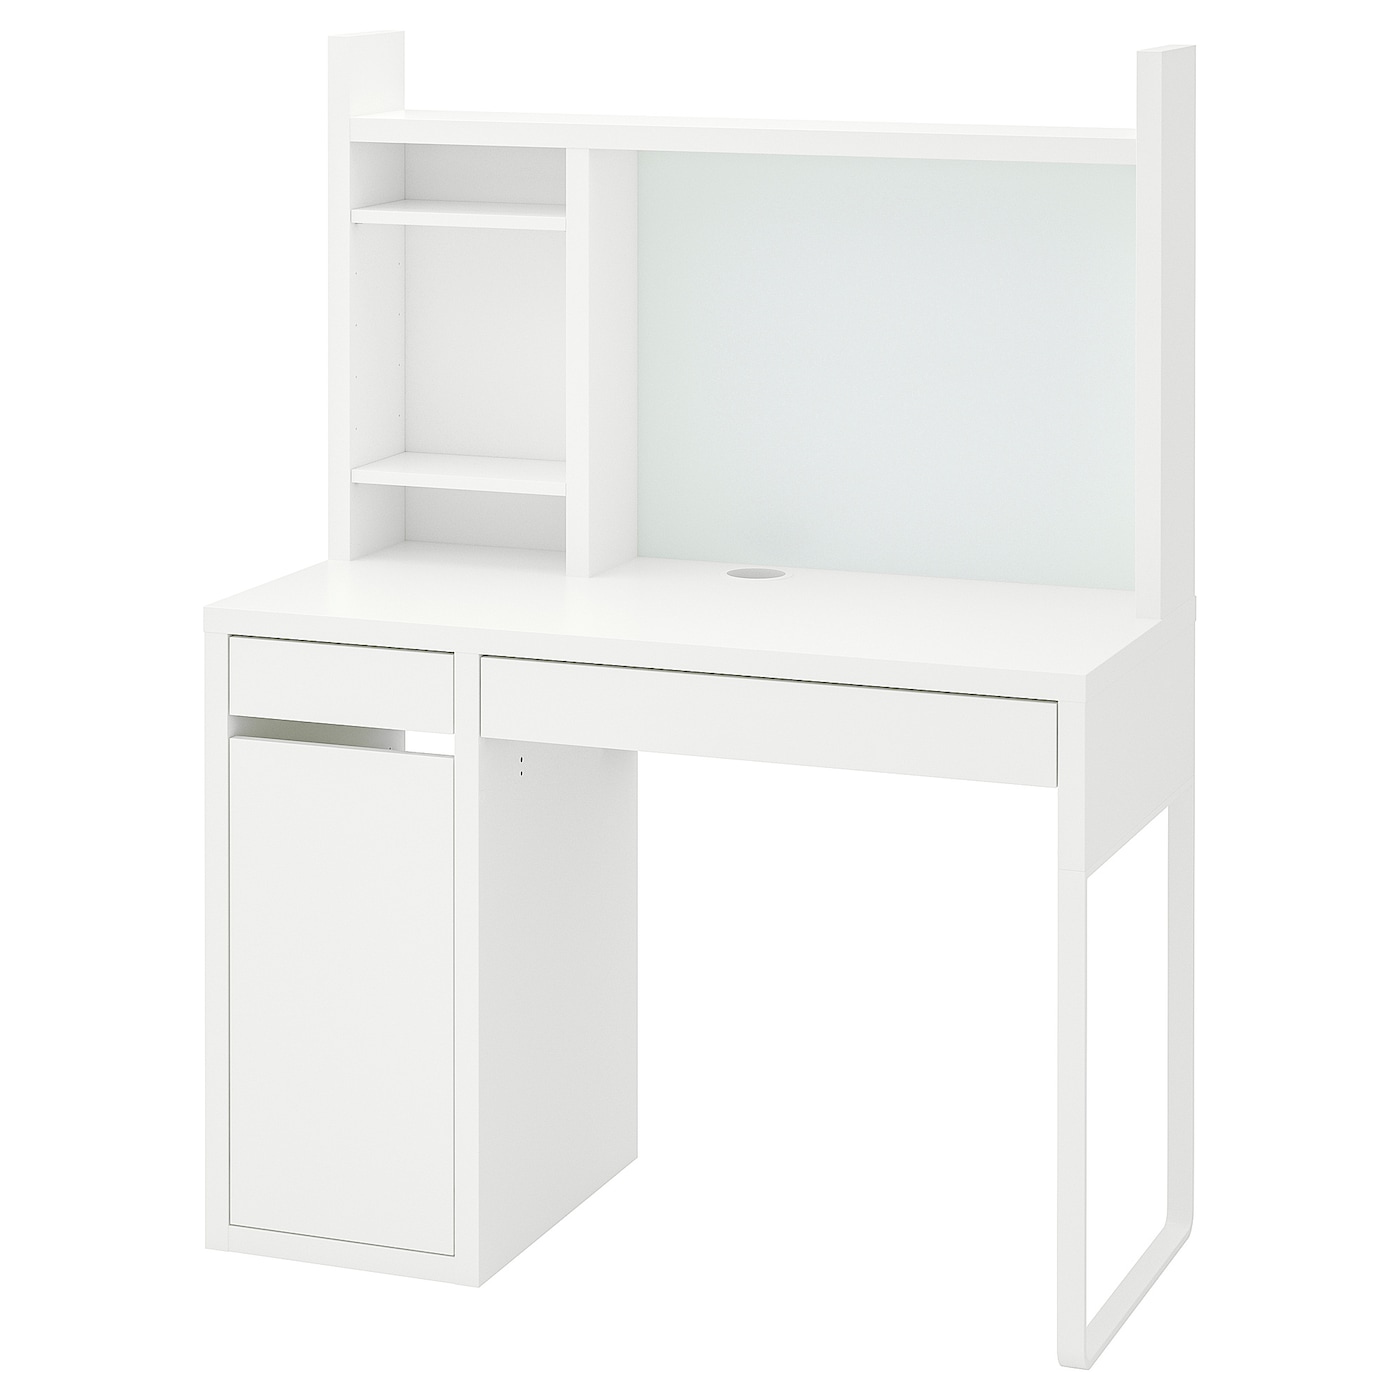 Письменный стол - IKEA MICKE, 105х50 см, белый, МИККЕ ИКЕА